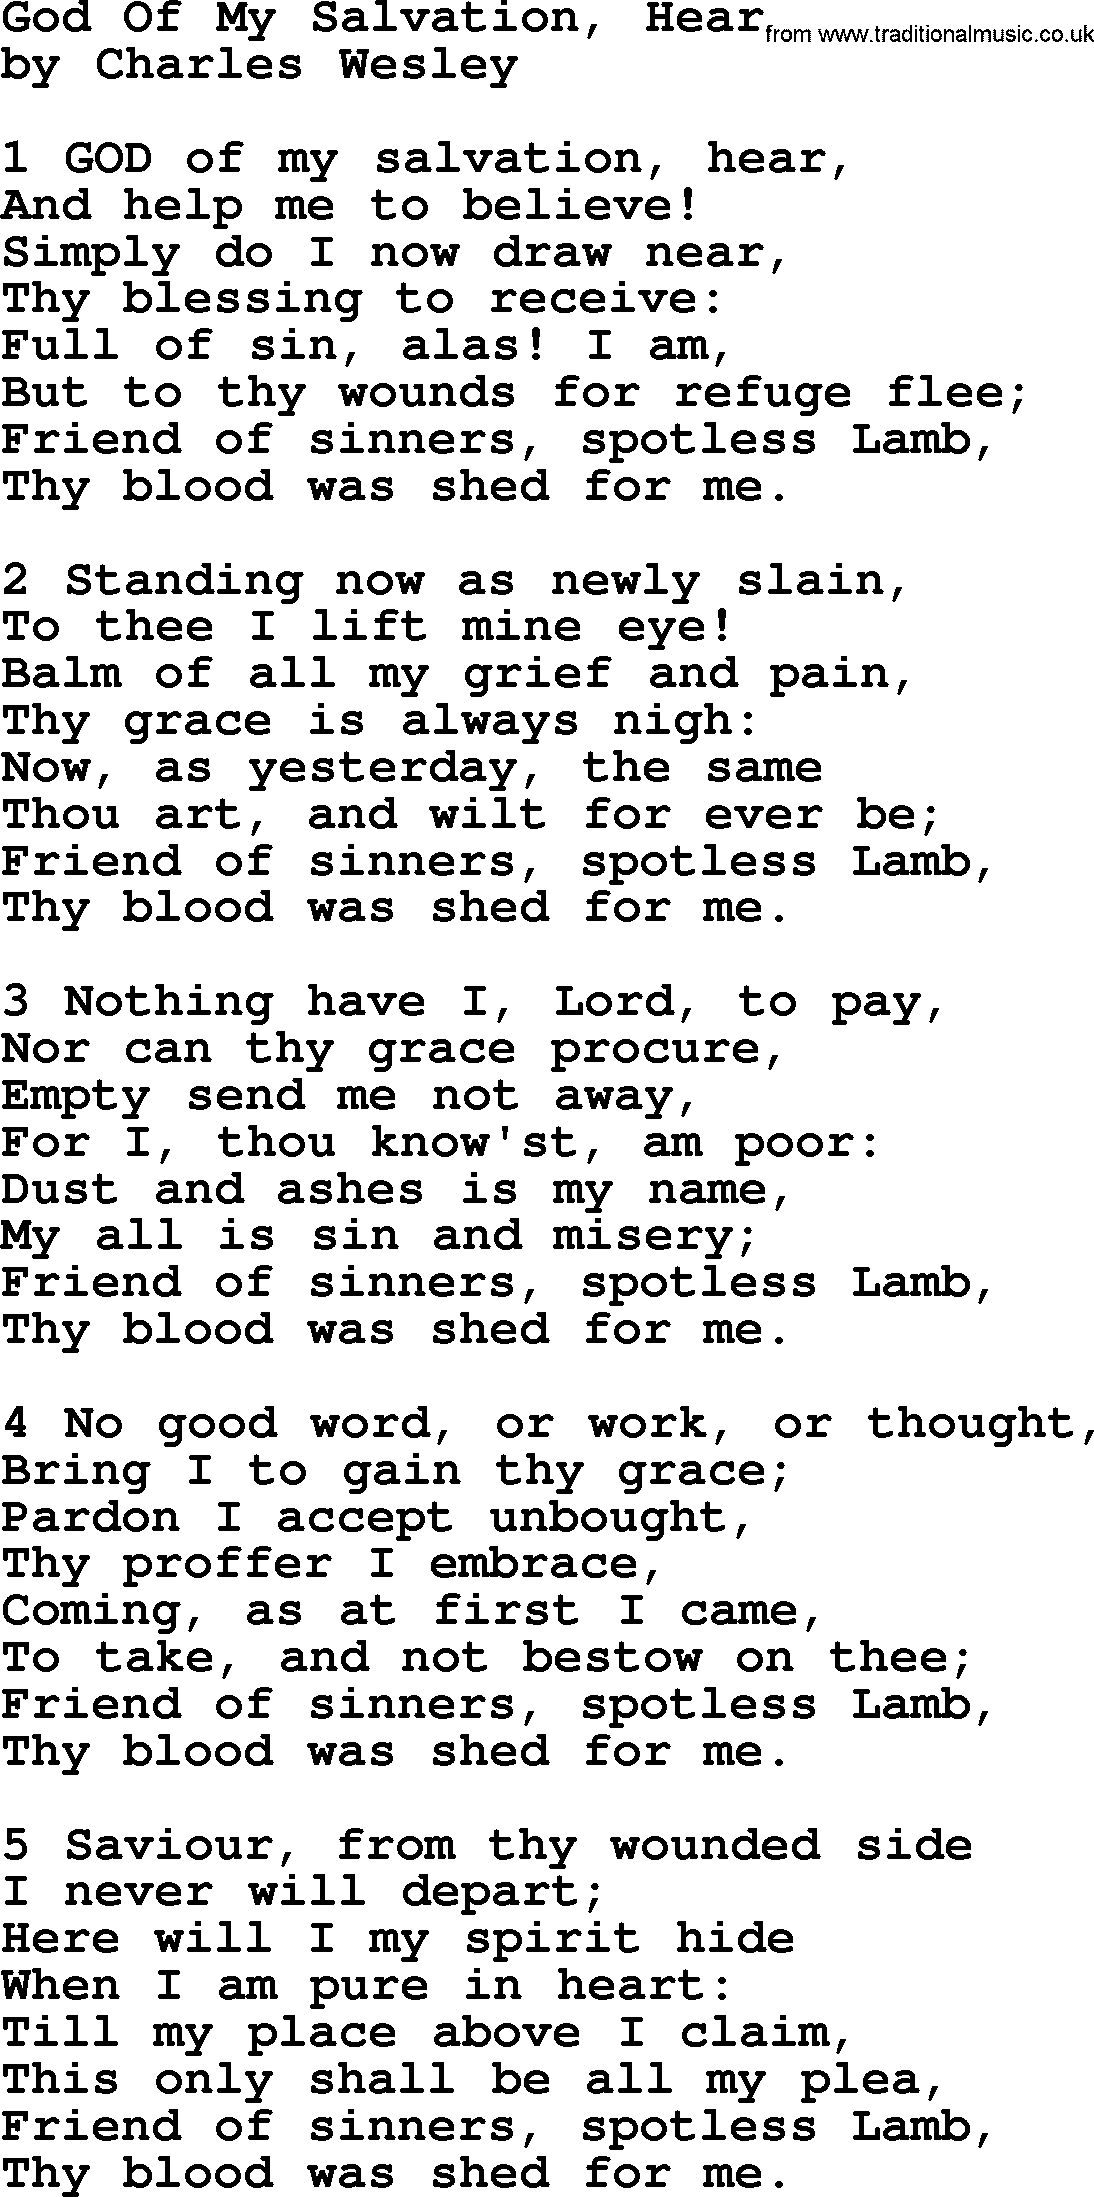 Charles Wesley hymn: God Of My Salvation, Hear, lyrics